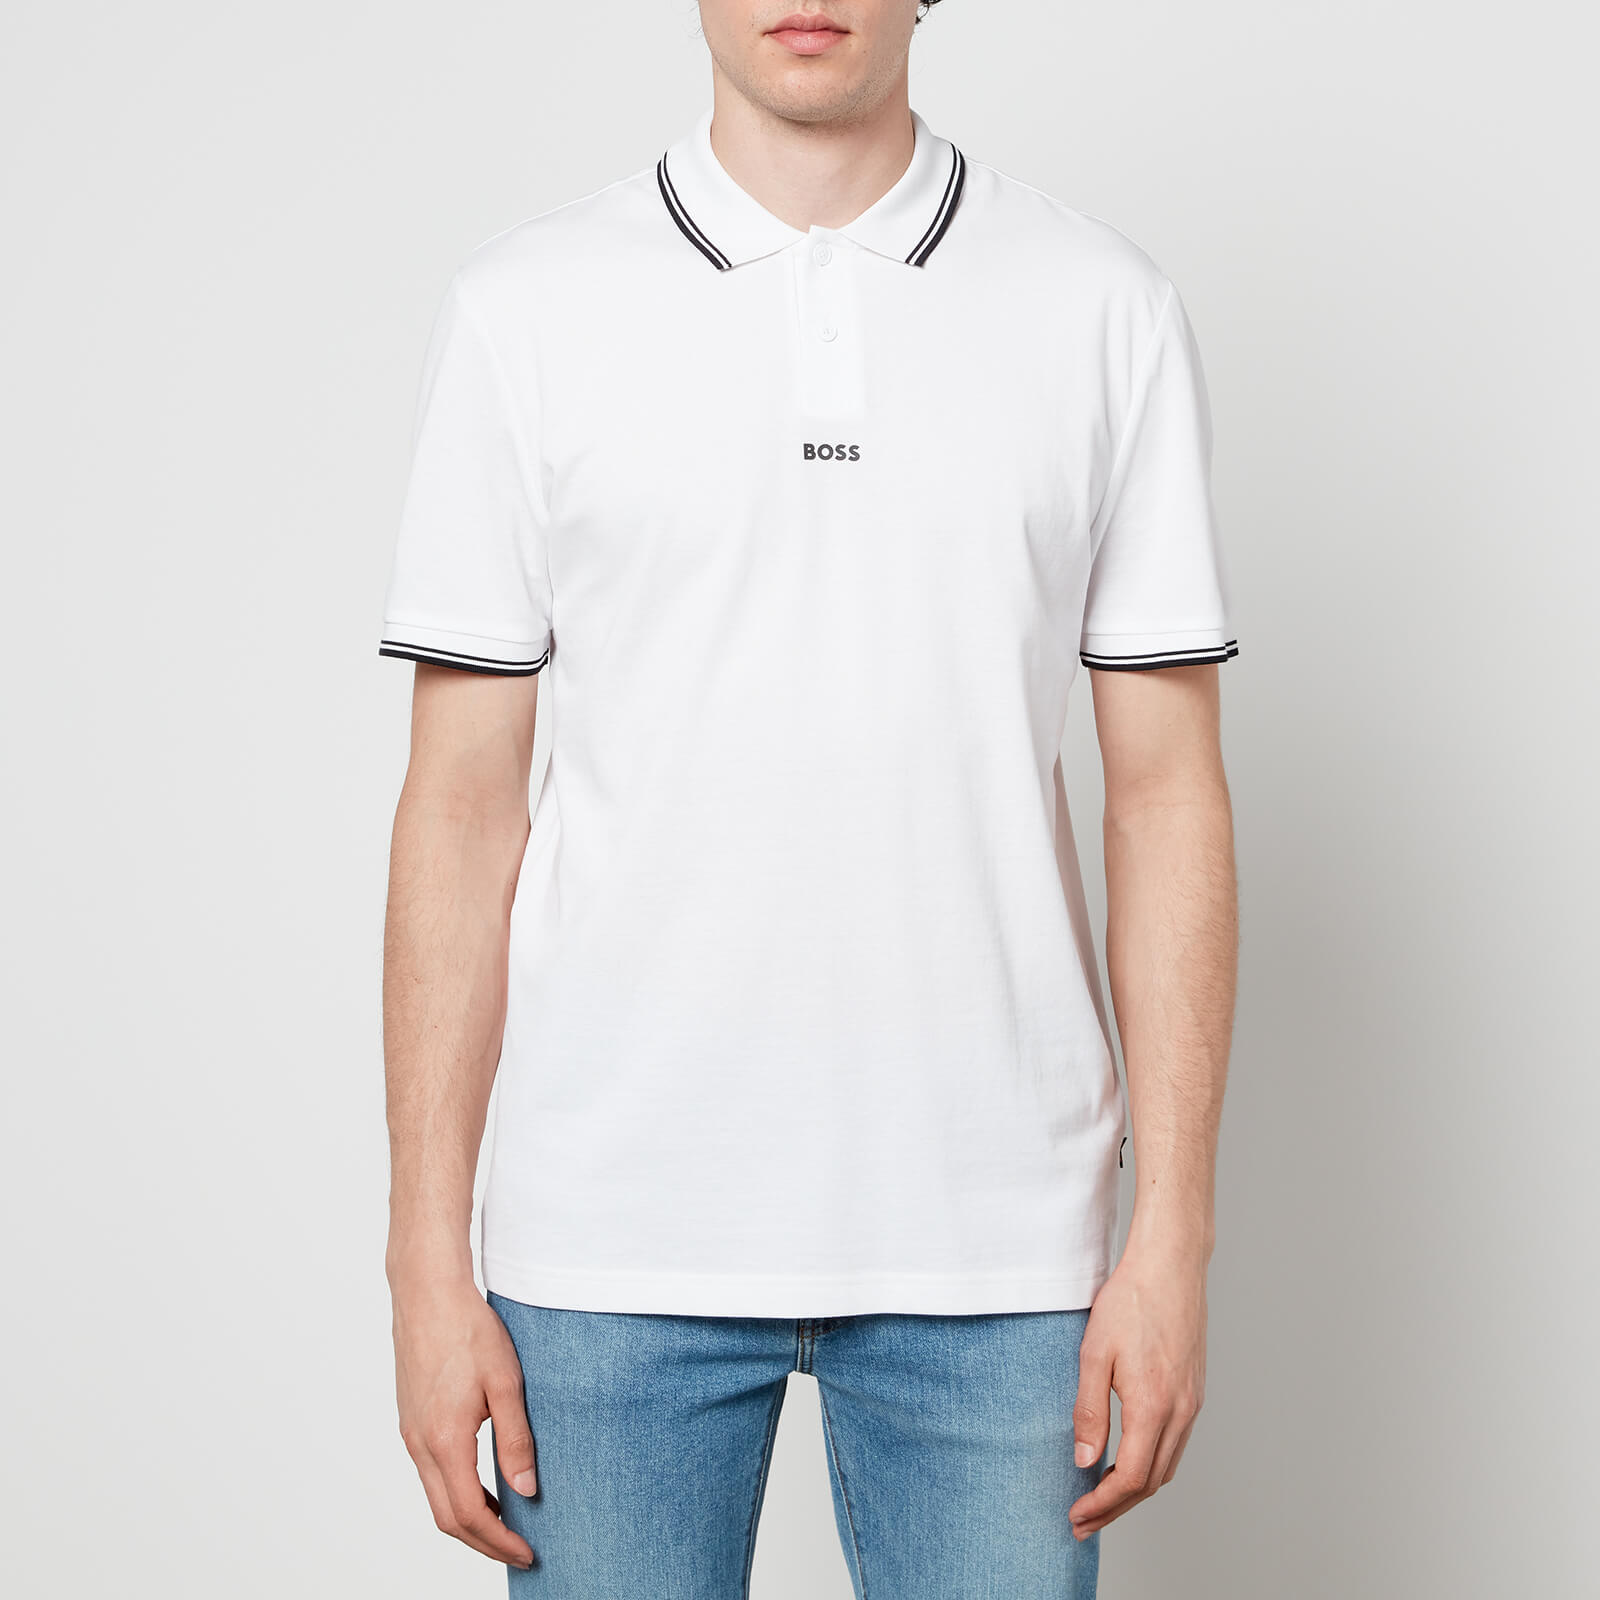 BOSS Casual Men's Pchup Polo Shirt - White - M